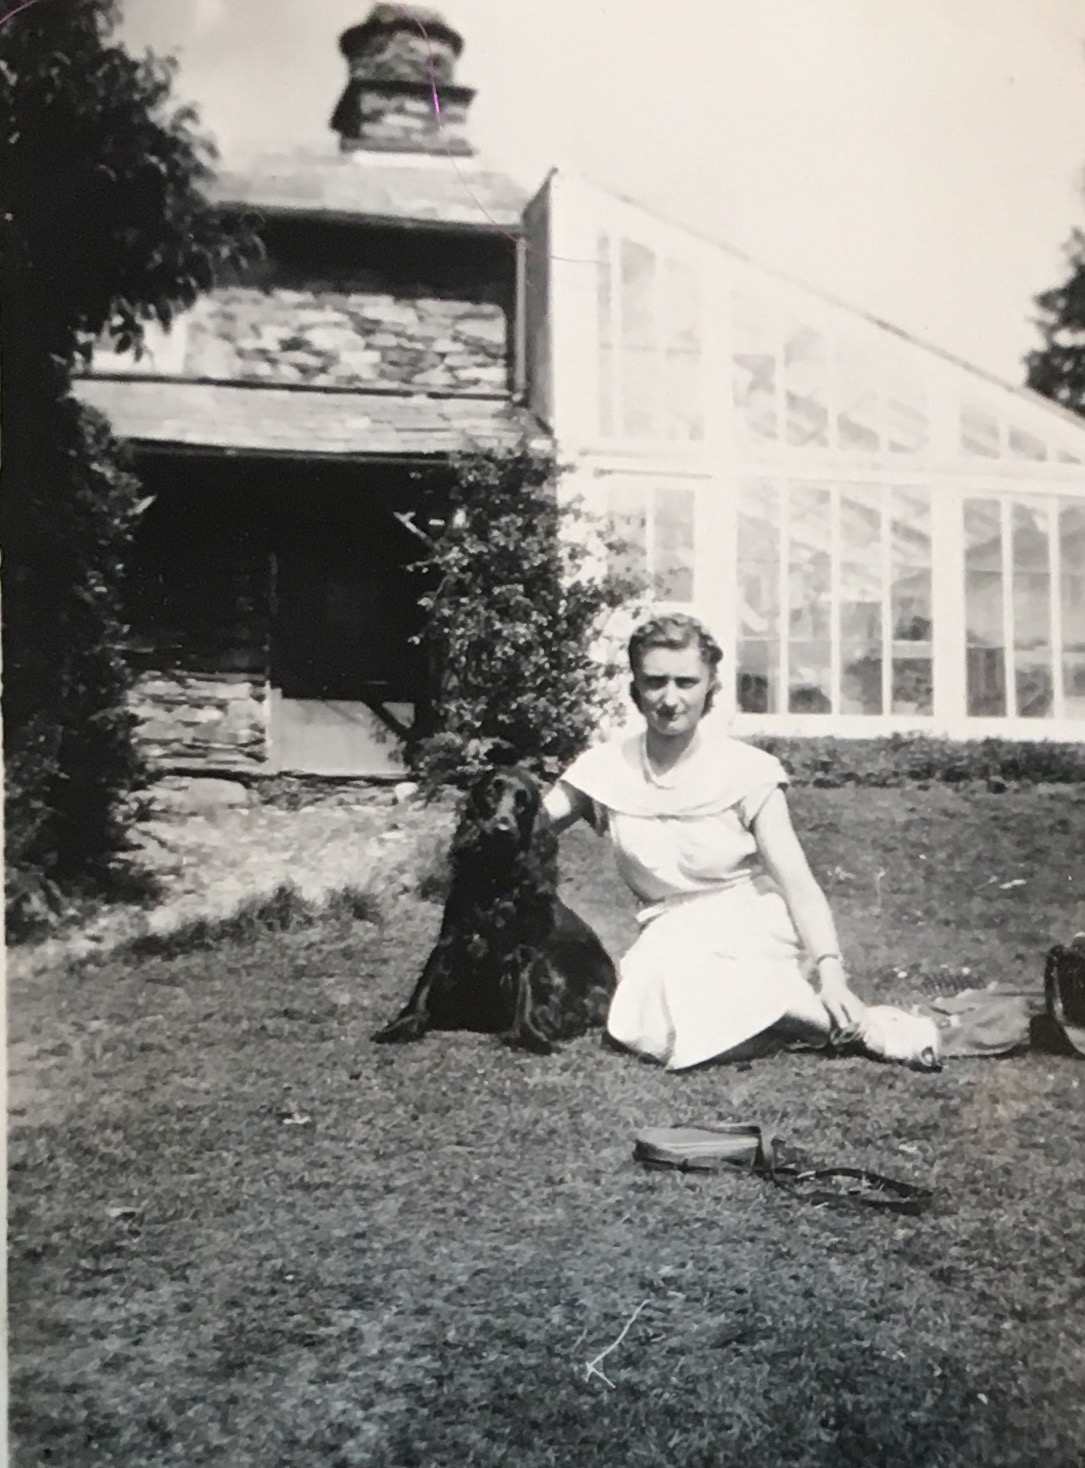 Ambleside hostel garden 1950